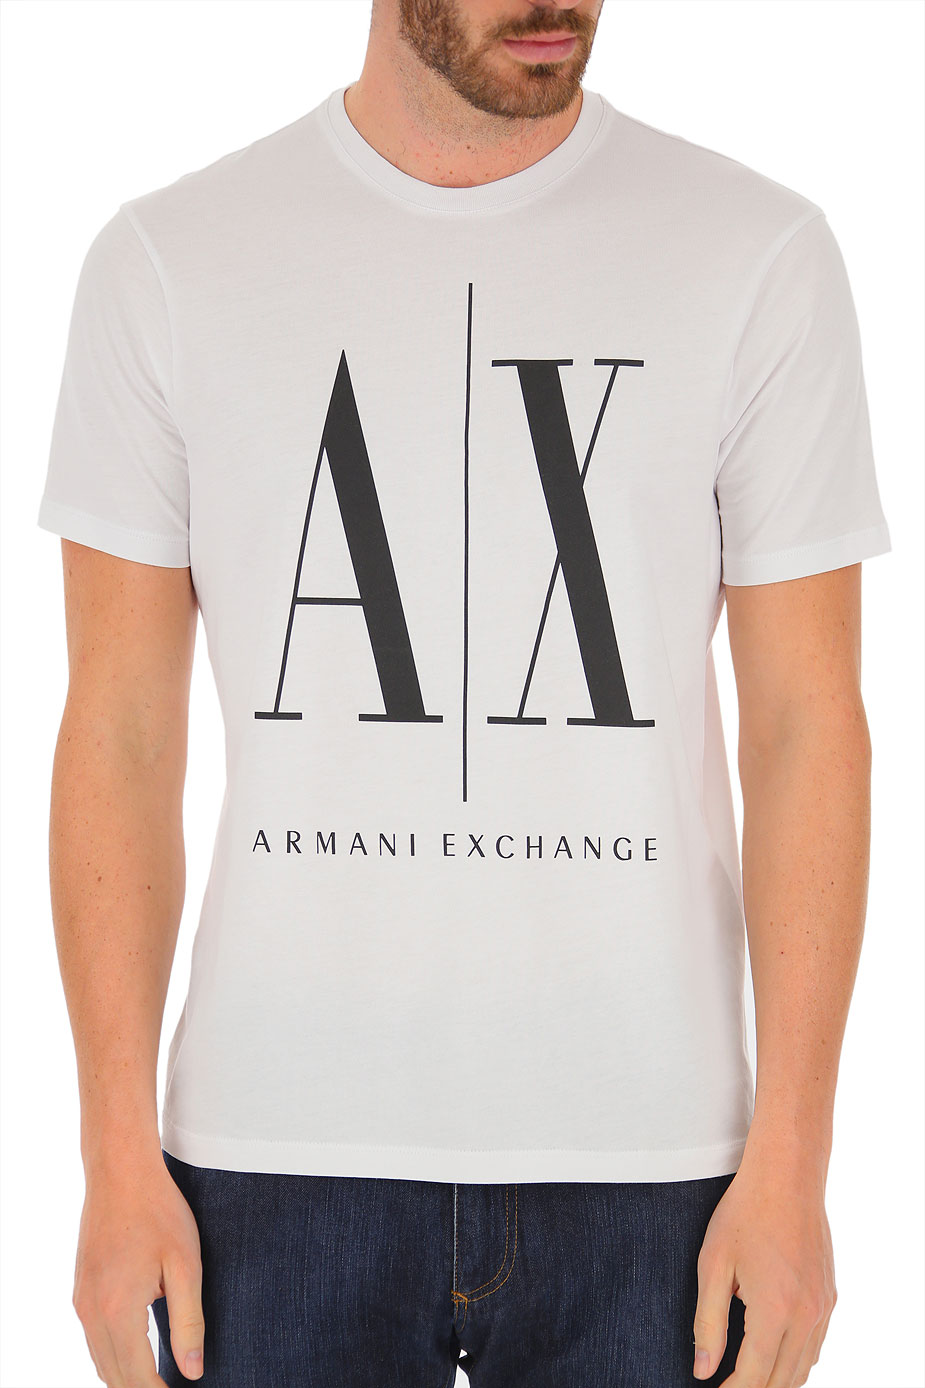 Mens Clothing Armani Exchange, Style code: 8nztpa-zjh4z-5100